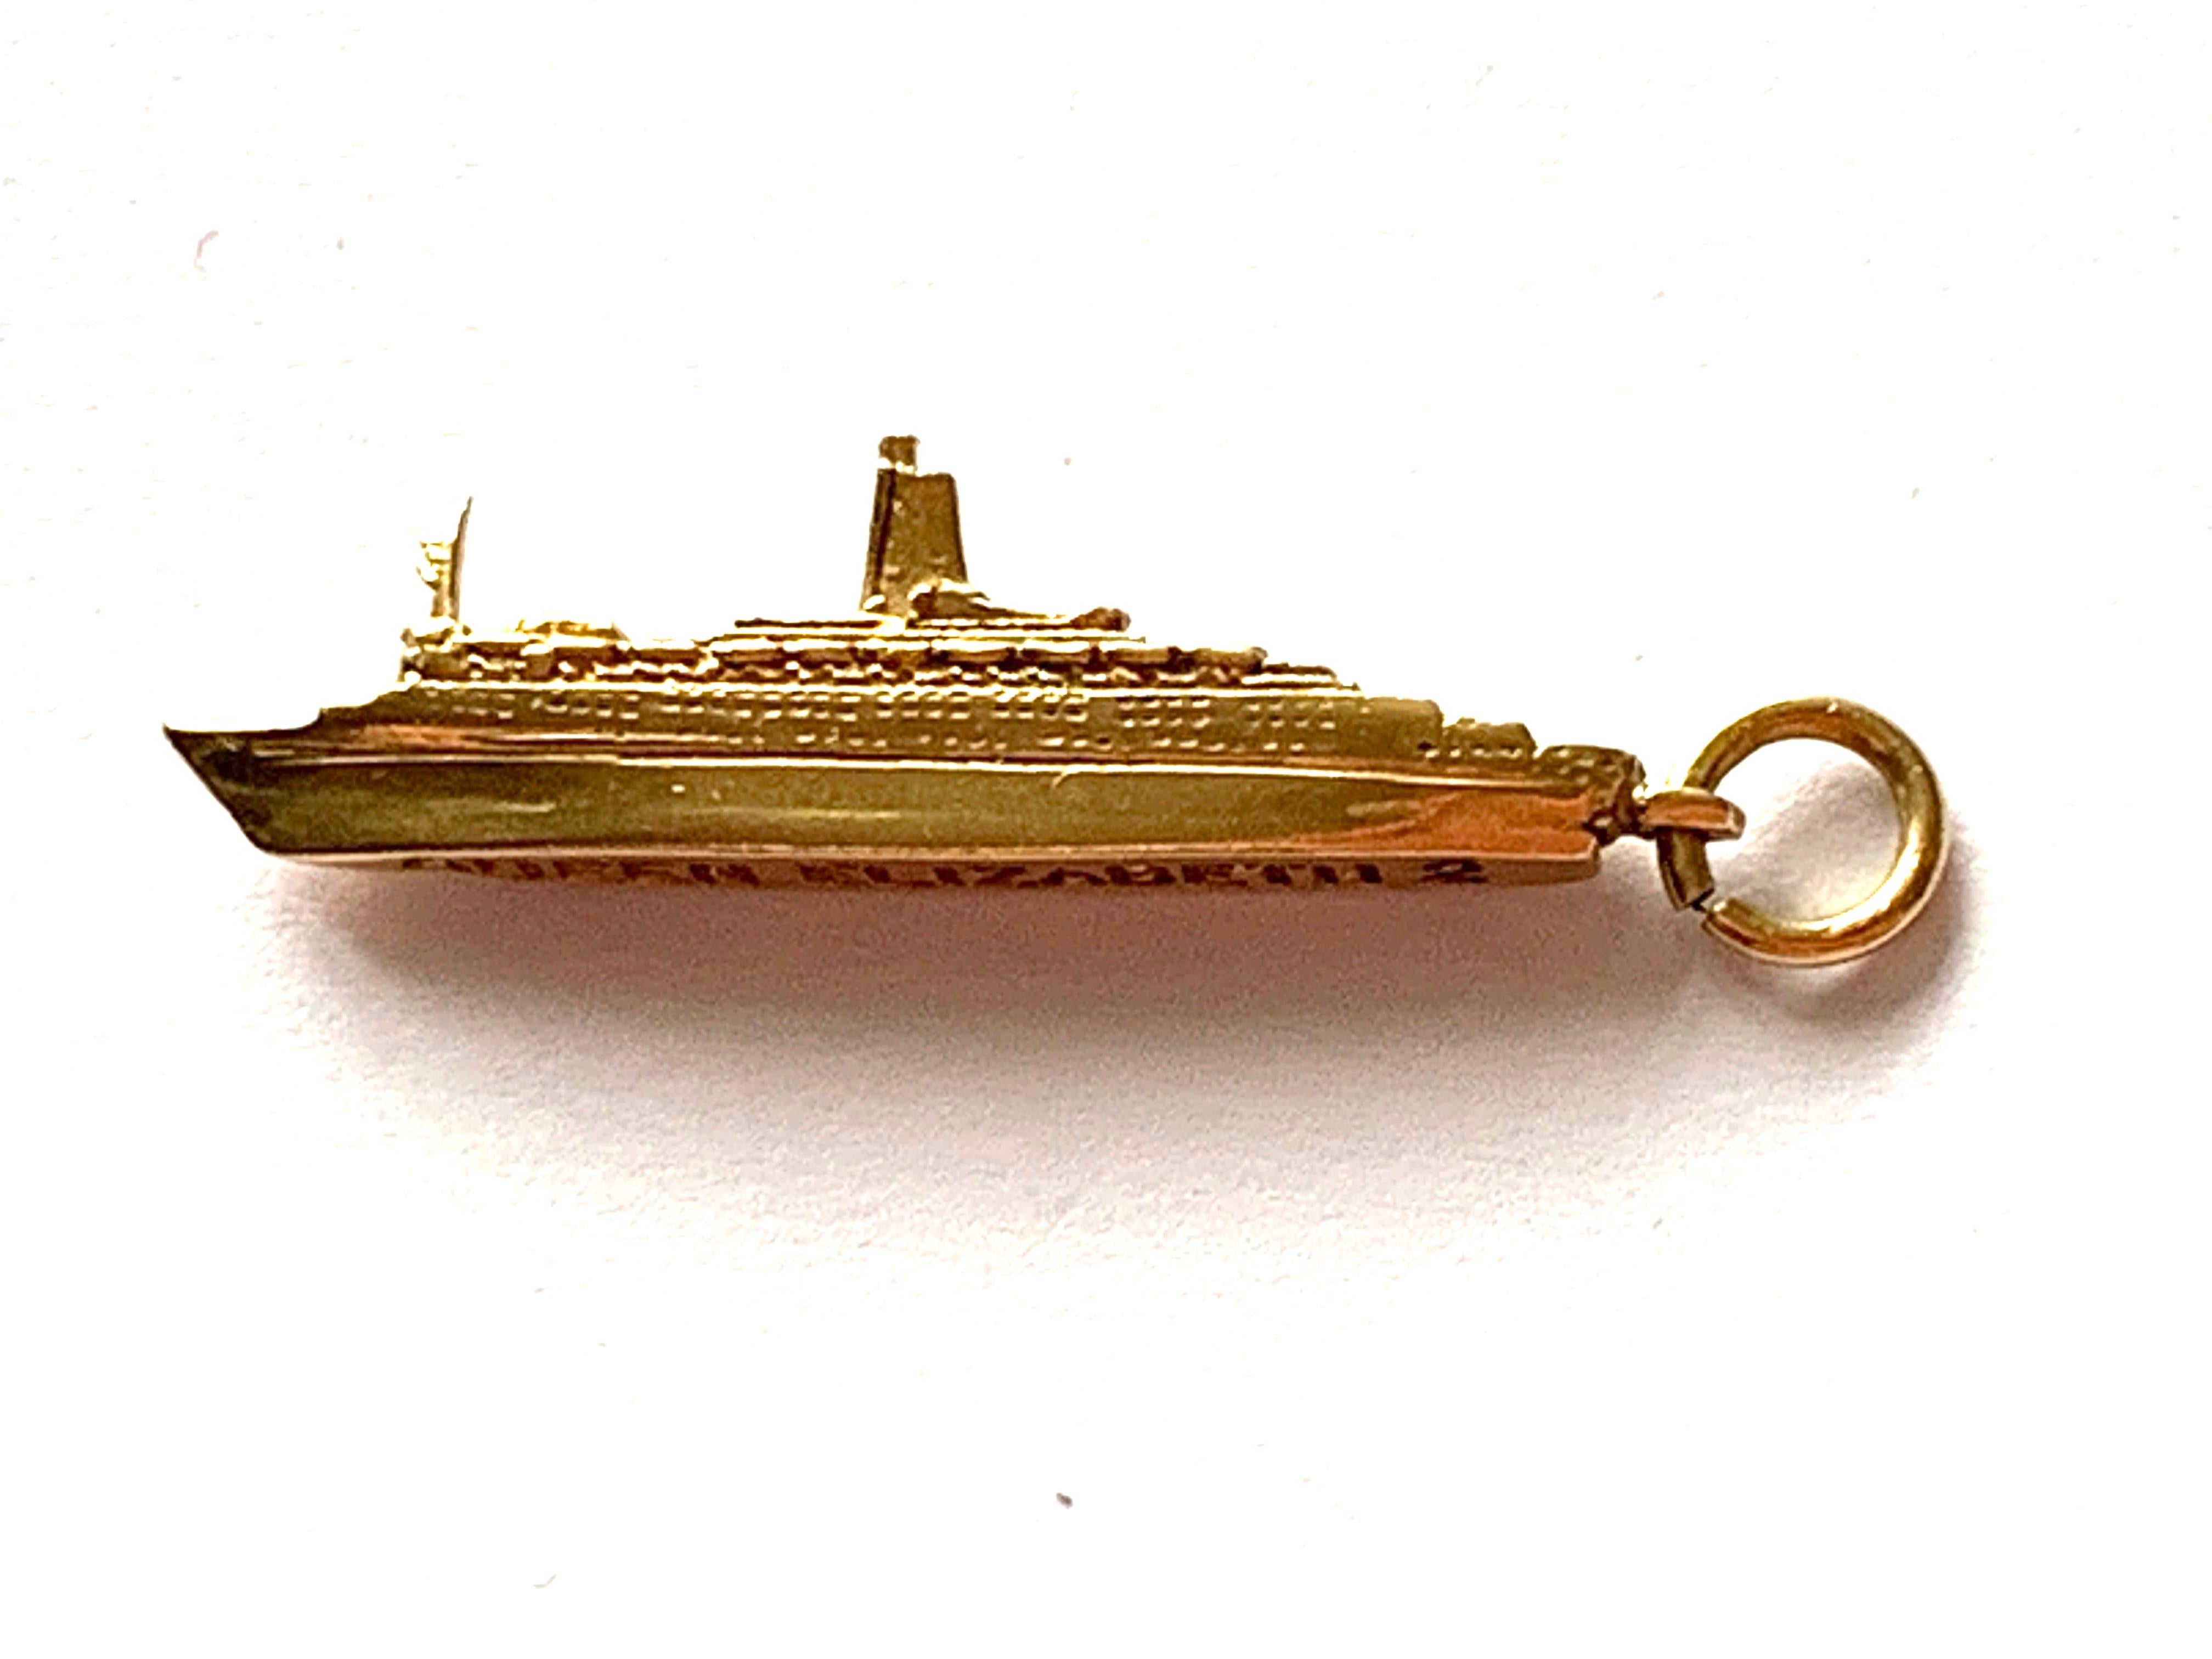 9ct Gold Queen Elizabeth 11 Ship Pendant
Hallmarked  BAO ( Birmingham assay offices )
Weight 2.6 grammes
Length 3.5 cm (Incl. Bail )
Width 6mm